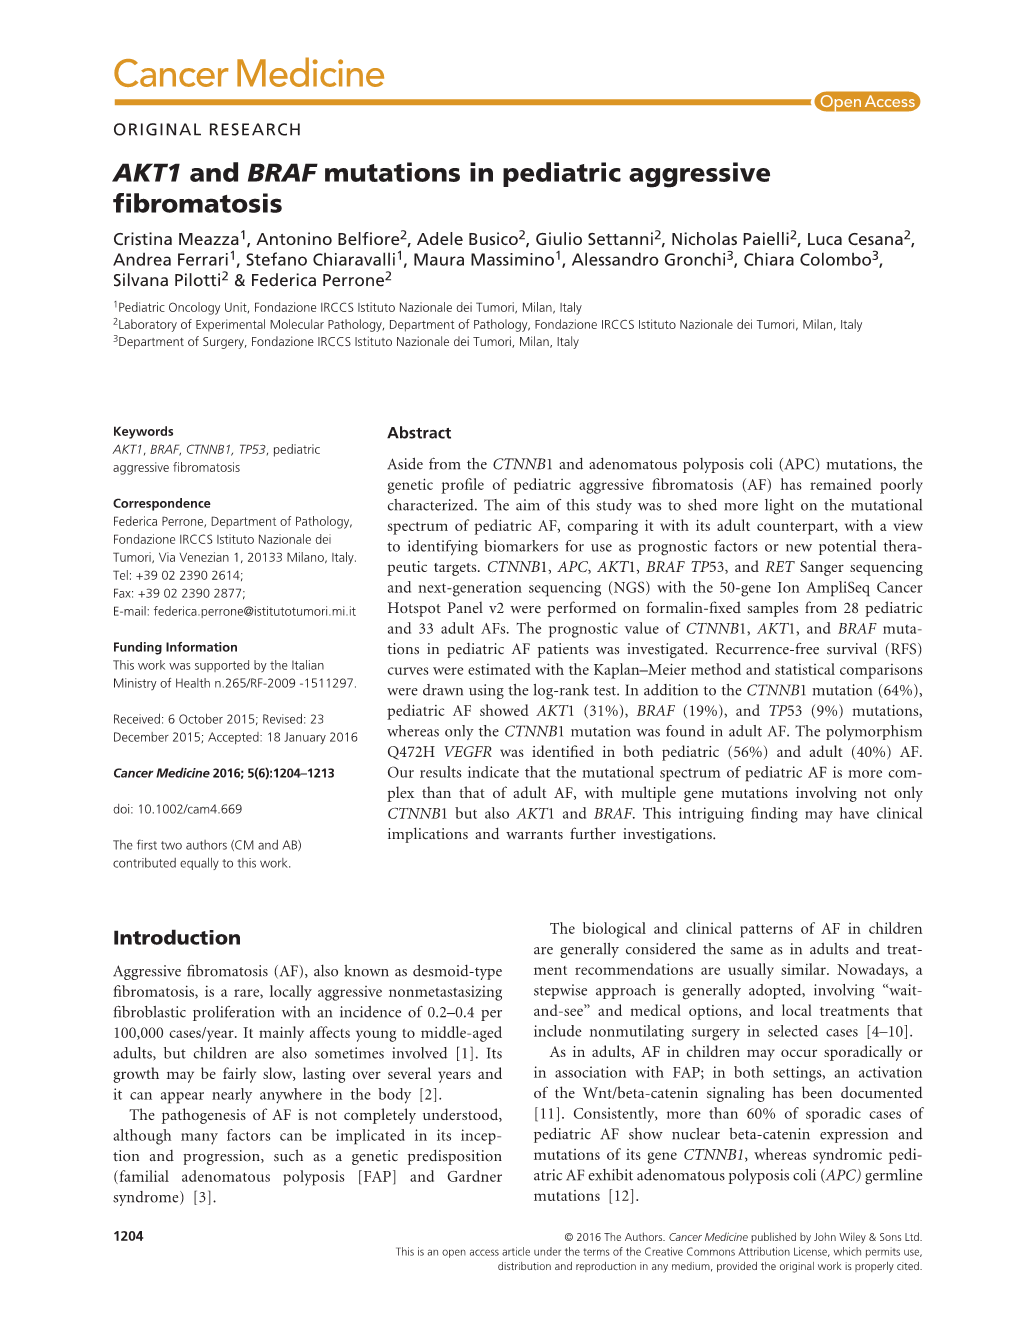 AKT1 and BRAF Mutations in Pediatric Aggressive Fibromatosis